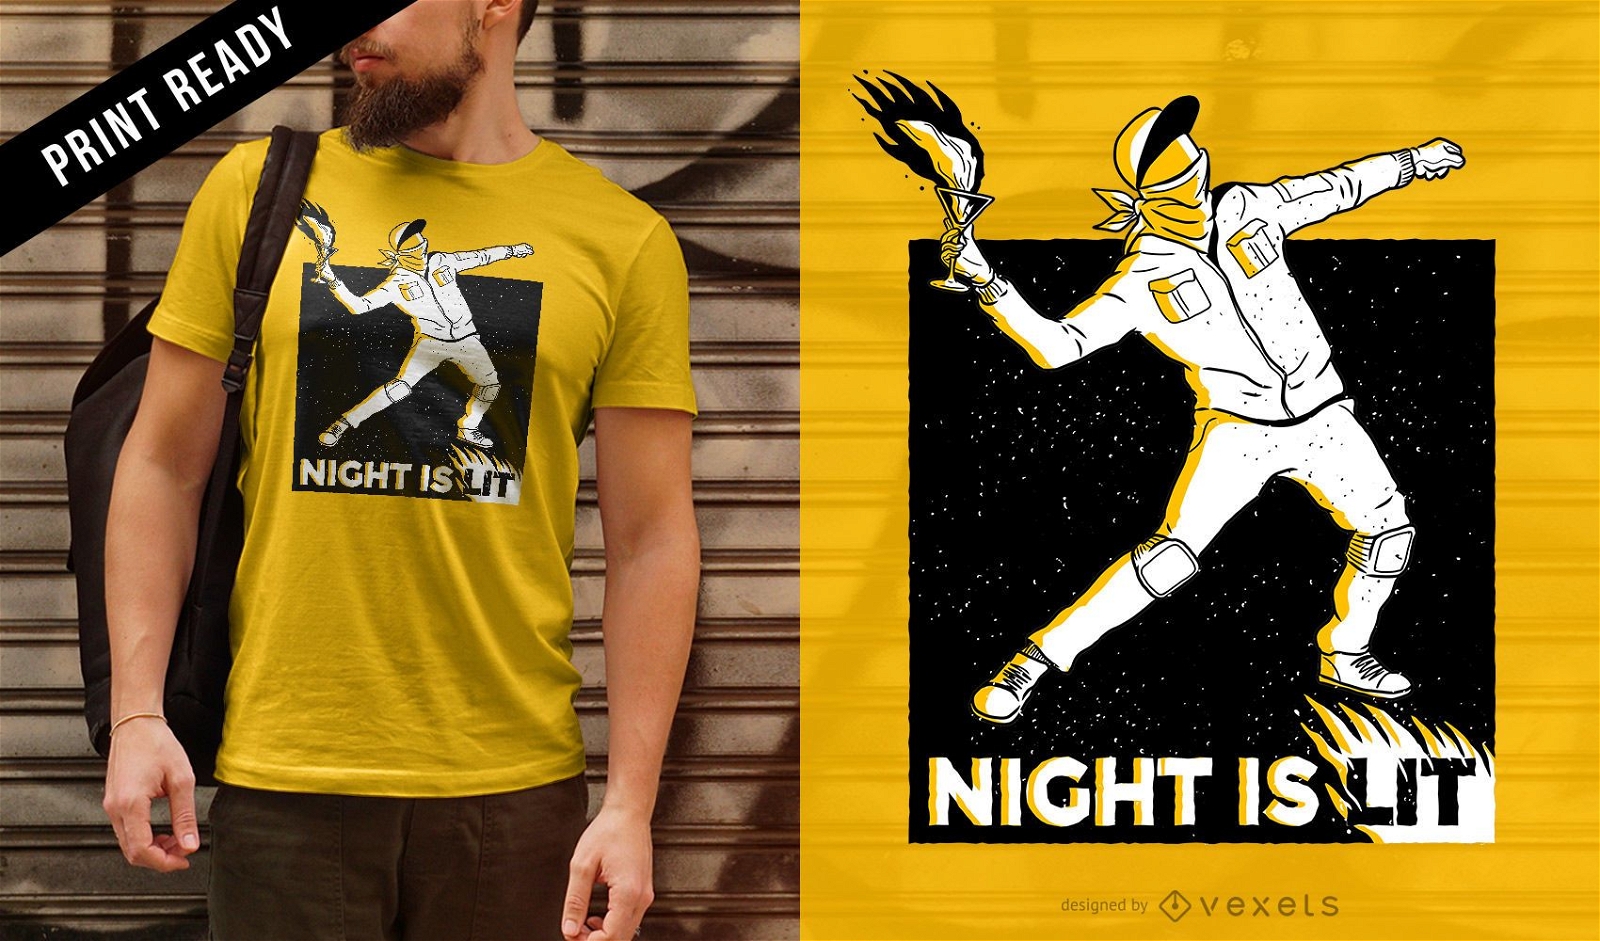 La noche est? iluminada dise?o de camiseta.